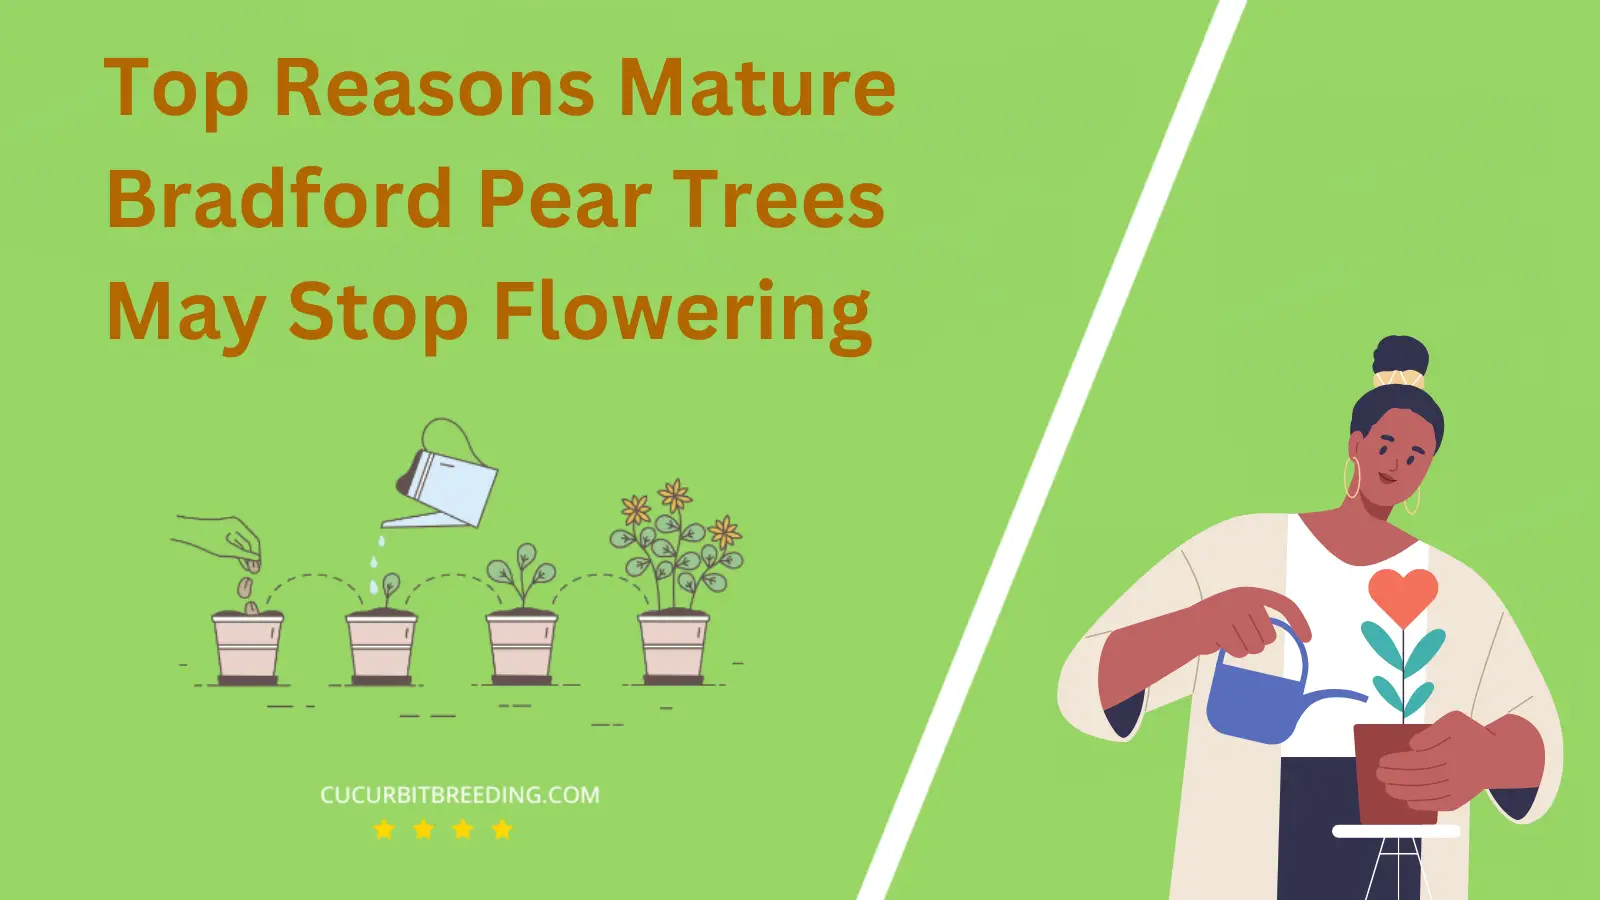 Top Reasons Mature Bradford Pear Trees May Stop Flowering